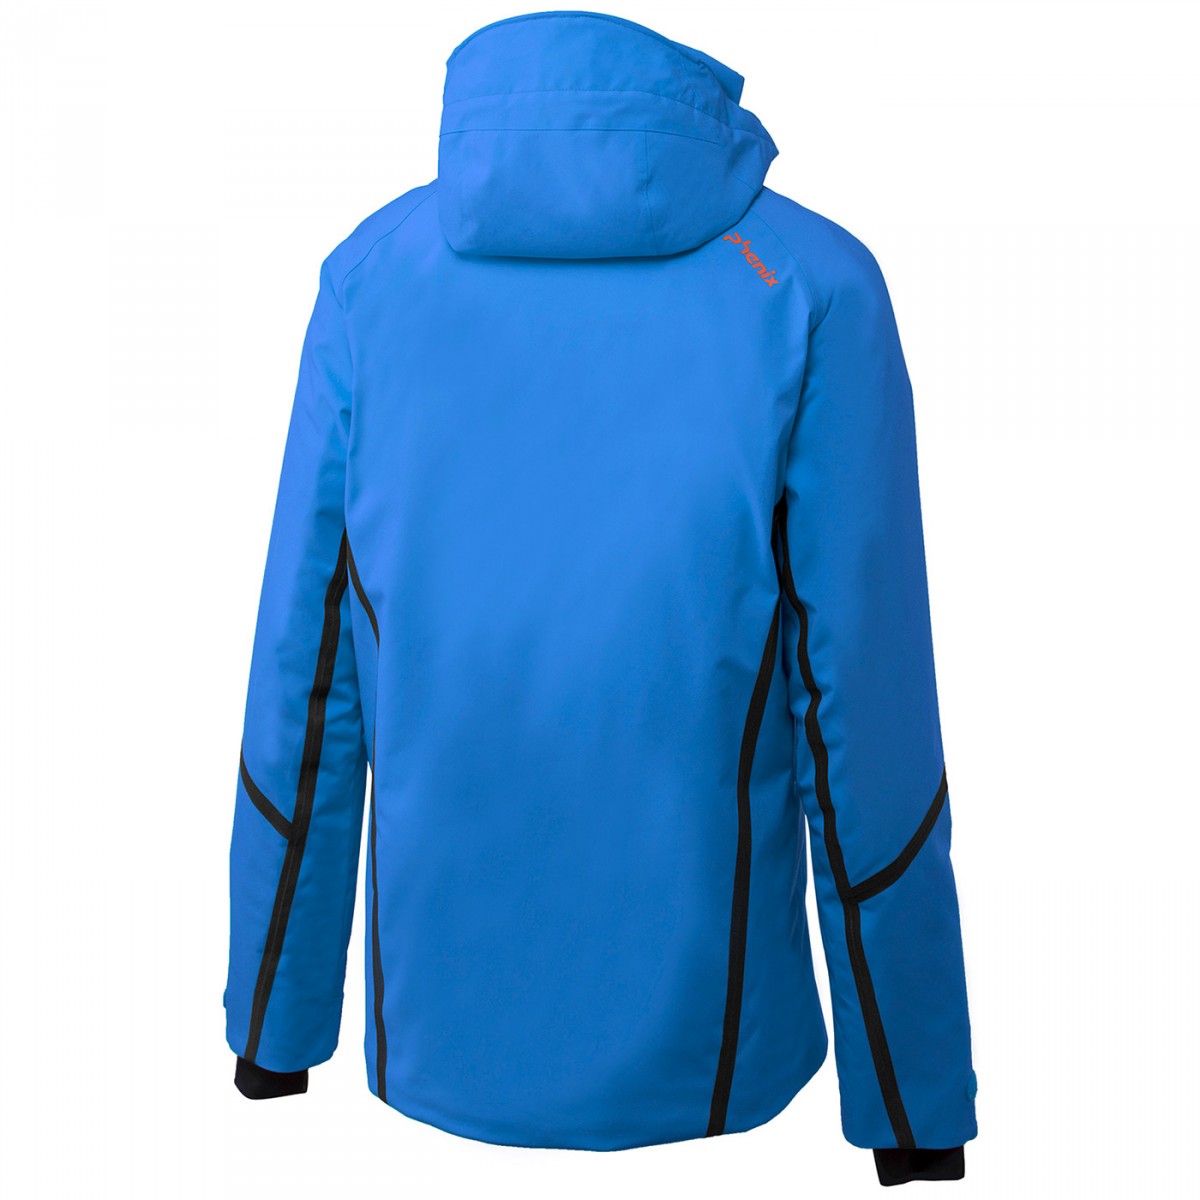 Light blue ski jacket